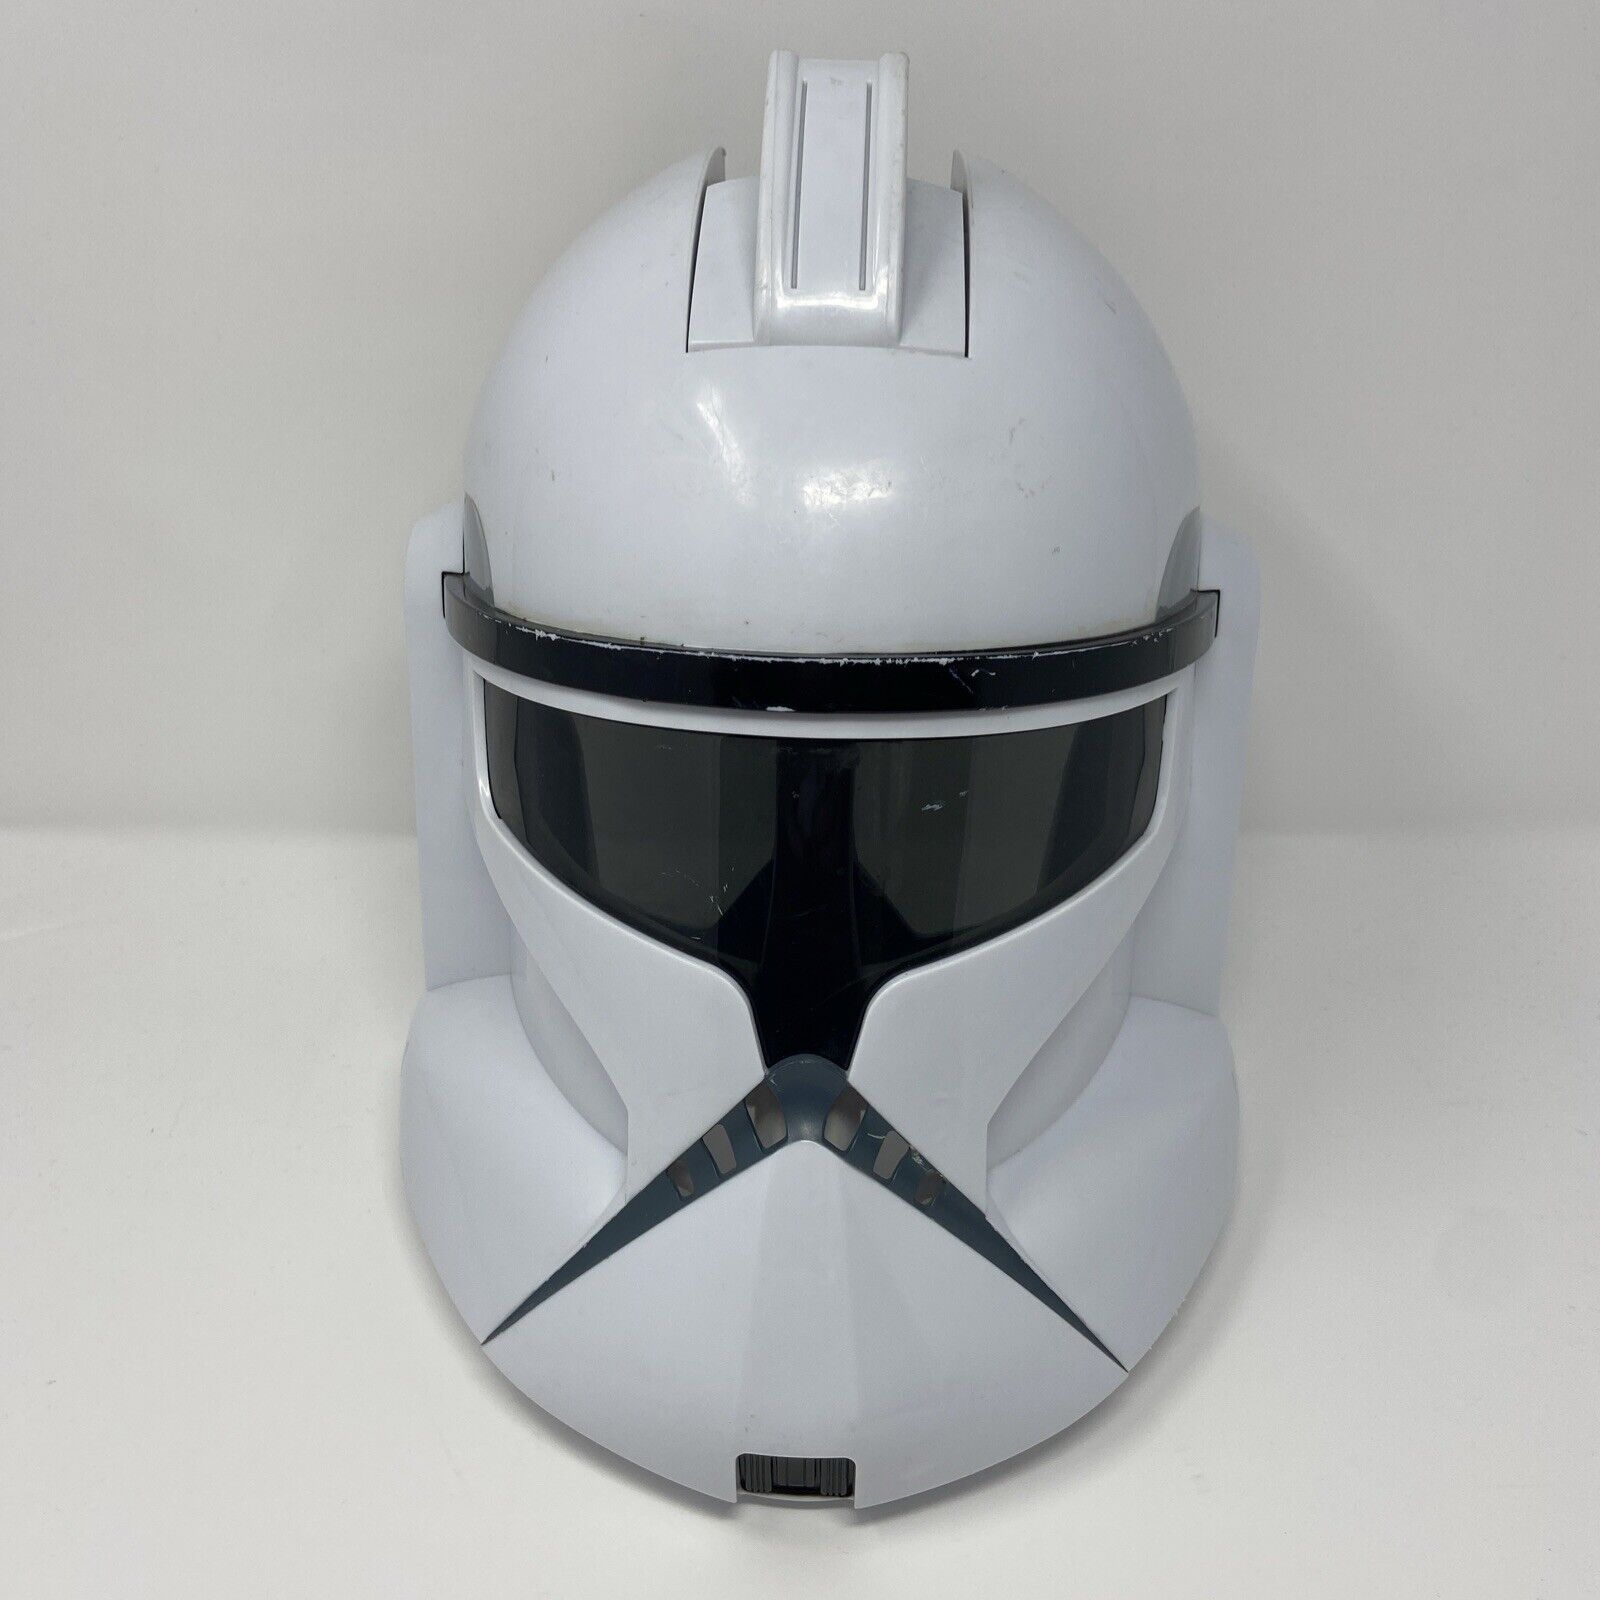 2008 Hasbro Star Wars Clone Storm Trooper Talking Voice Changer Helmet Costume